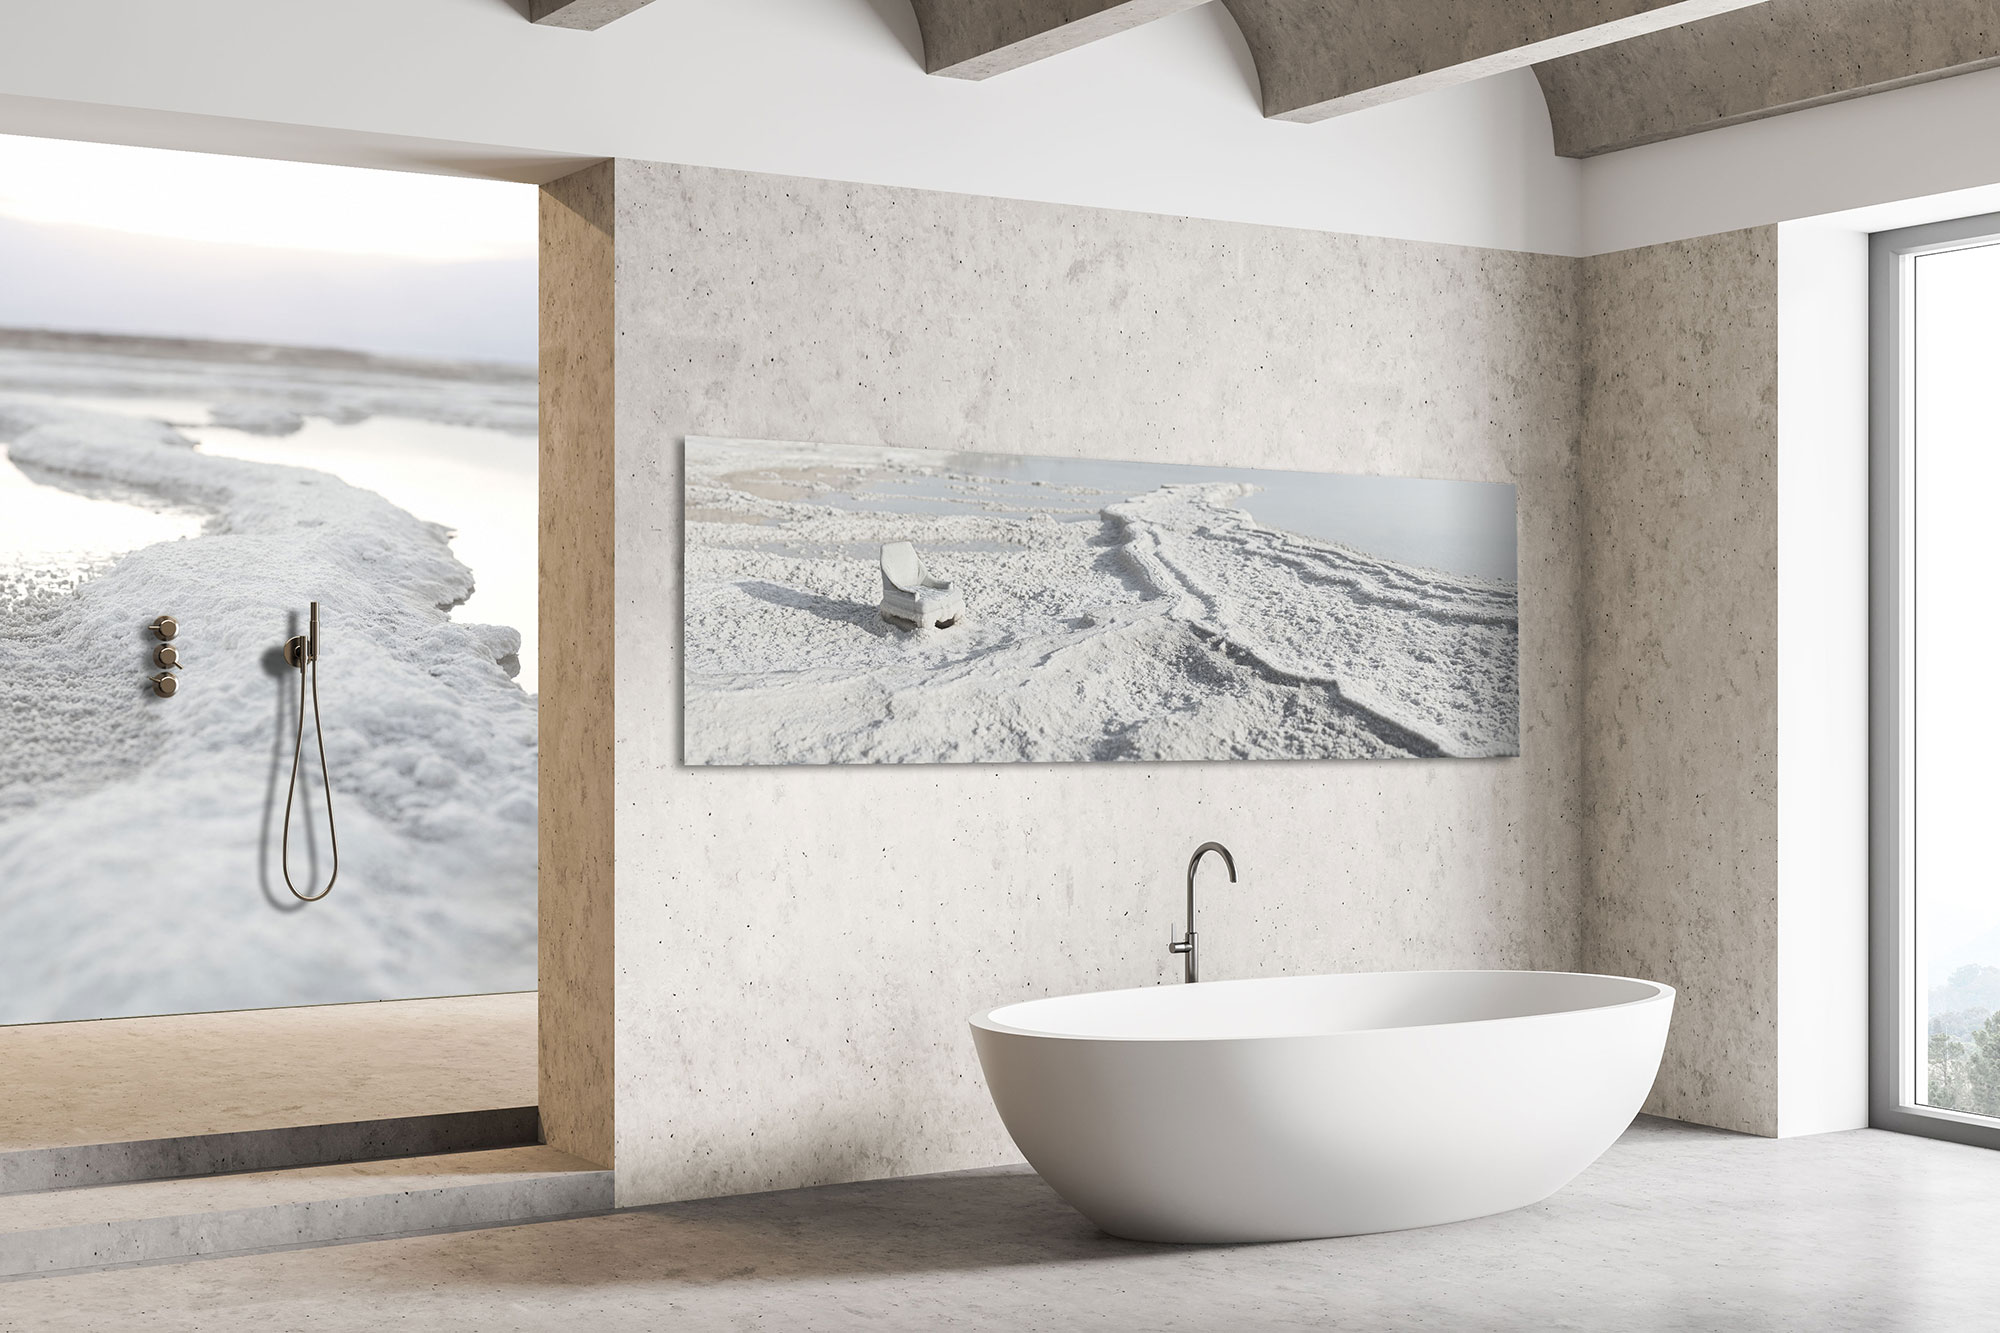 Bathroom wall art and gigapixel panels